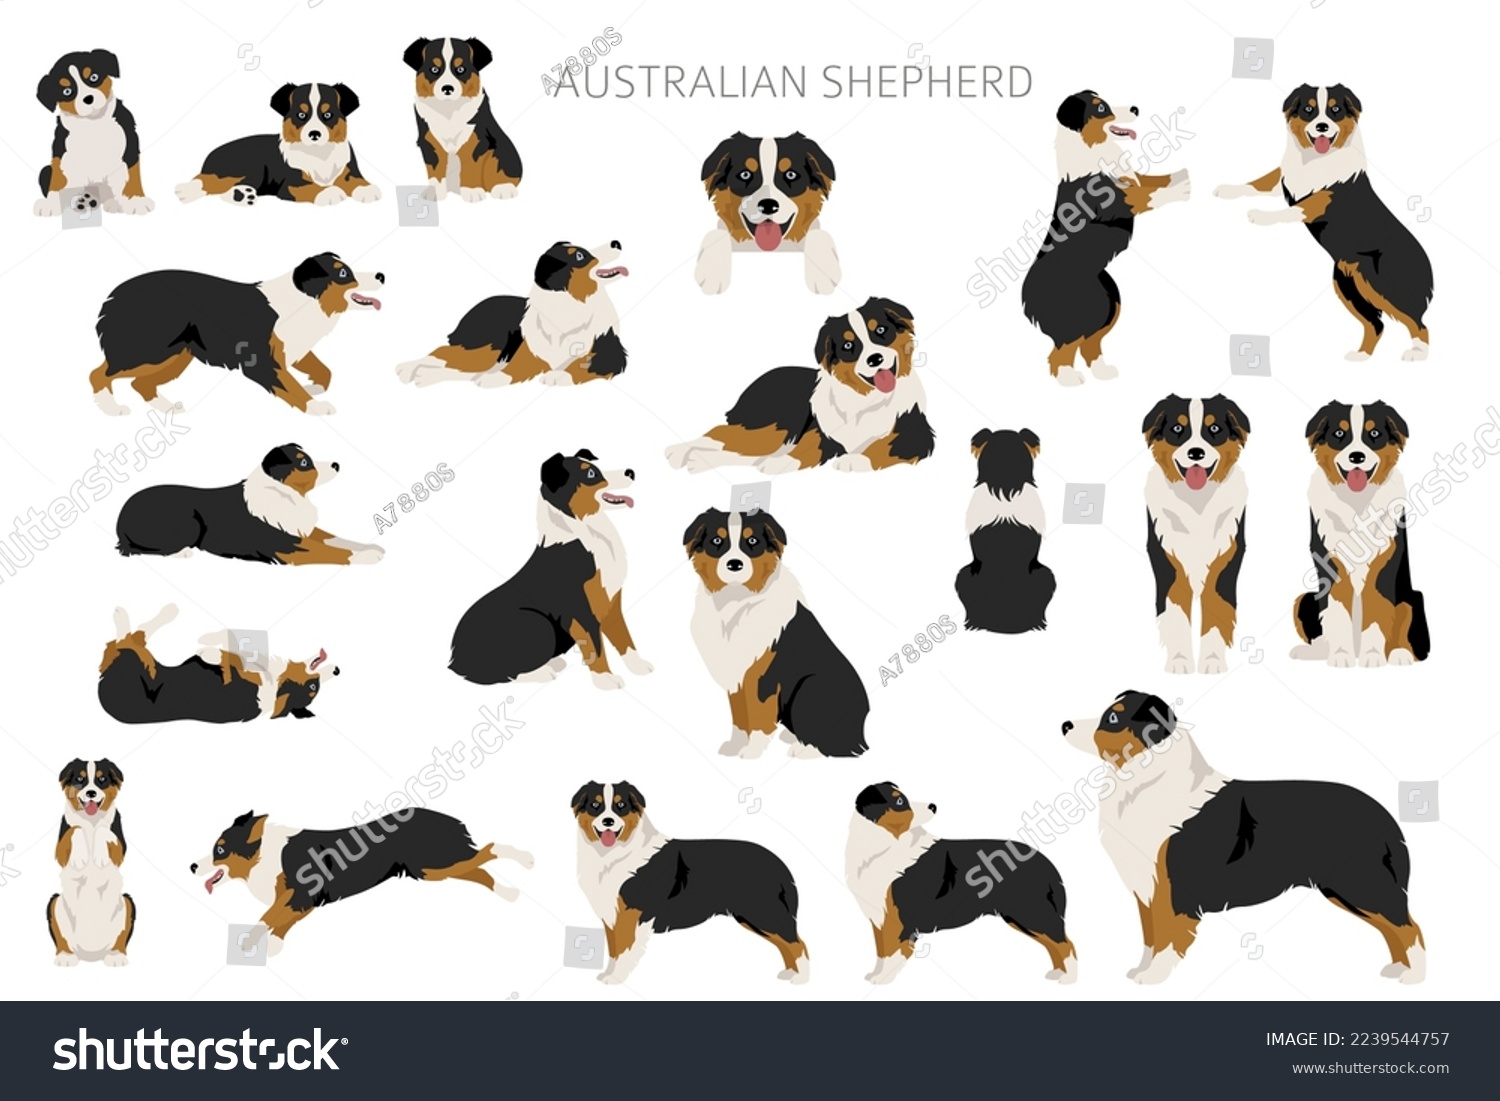 SVG of Australian shepherd clipart. Coat colors Aussie set.  All dog breeds characteristics infographic. Vector illustration svg